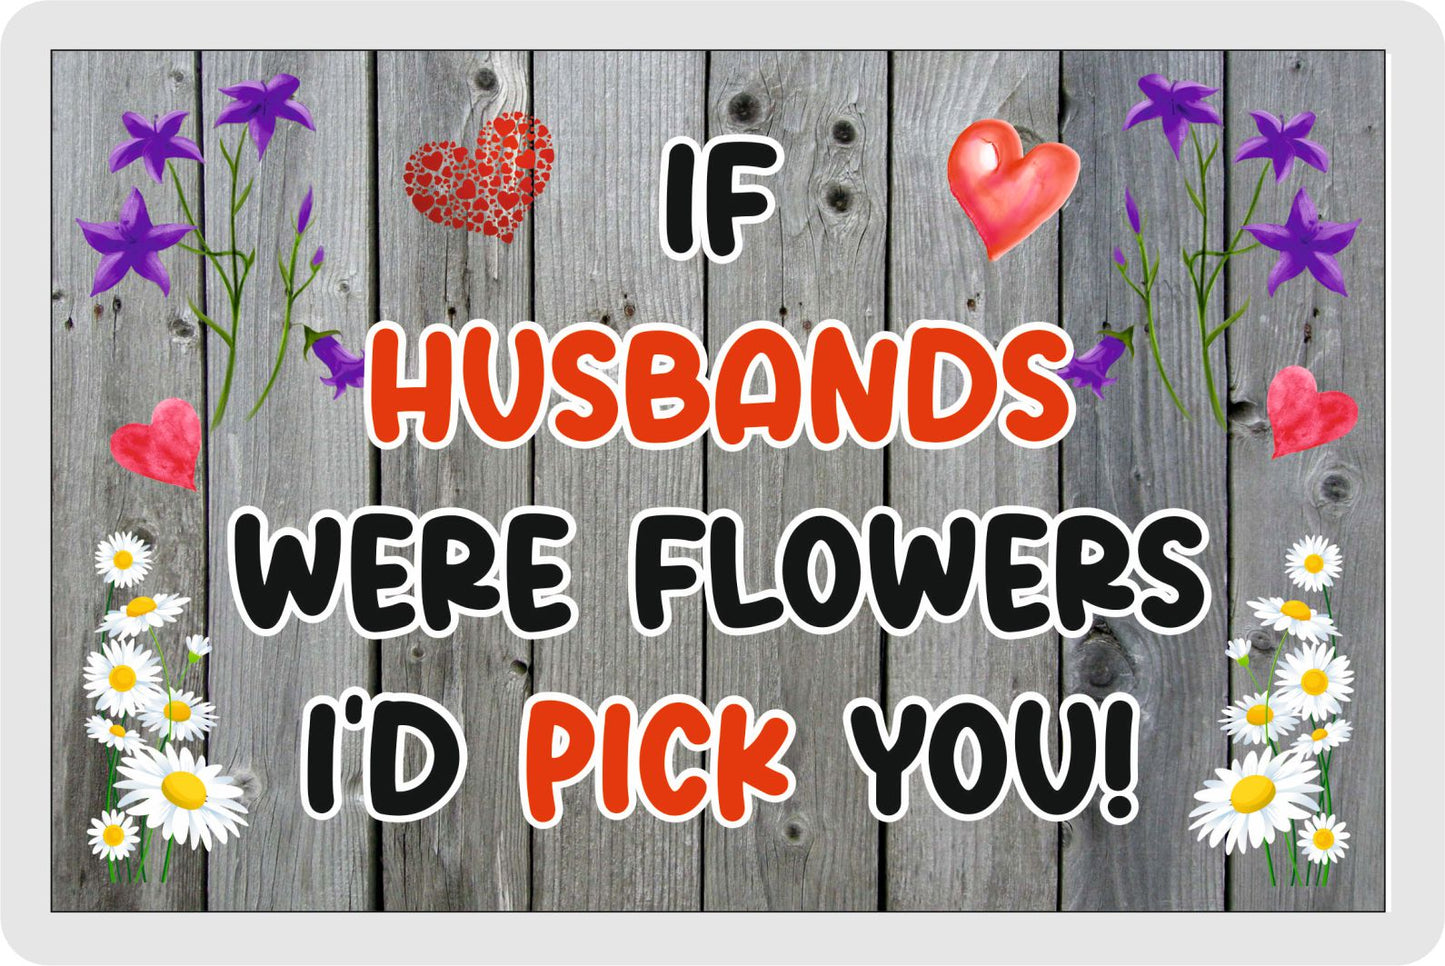 Husband Fridge Magnet - If Husbands were Flowers I'd Pick You - Novelty Love Gift - Fun Birthday Christmas Present